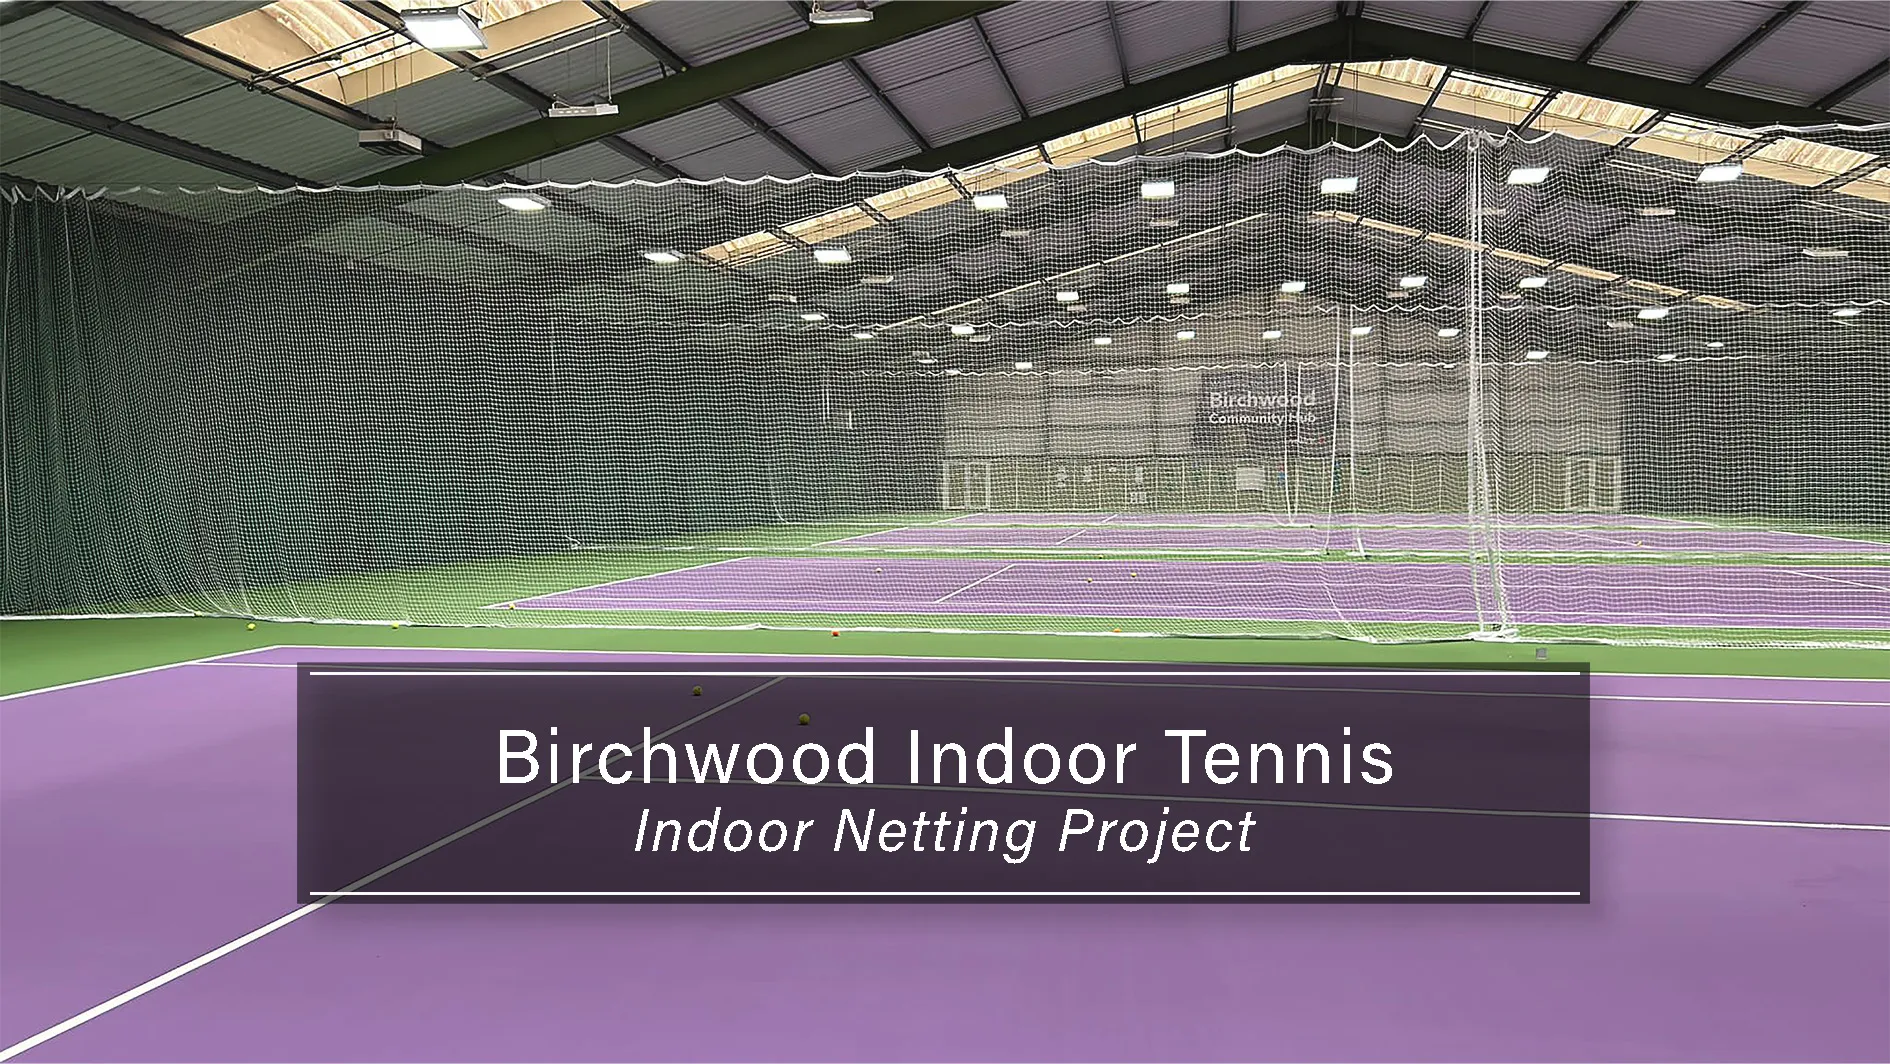 Birchwood Indoor Tennis Centre